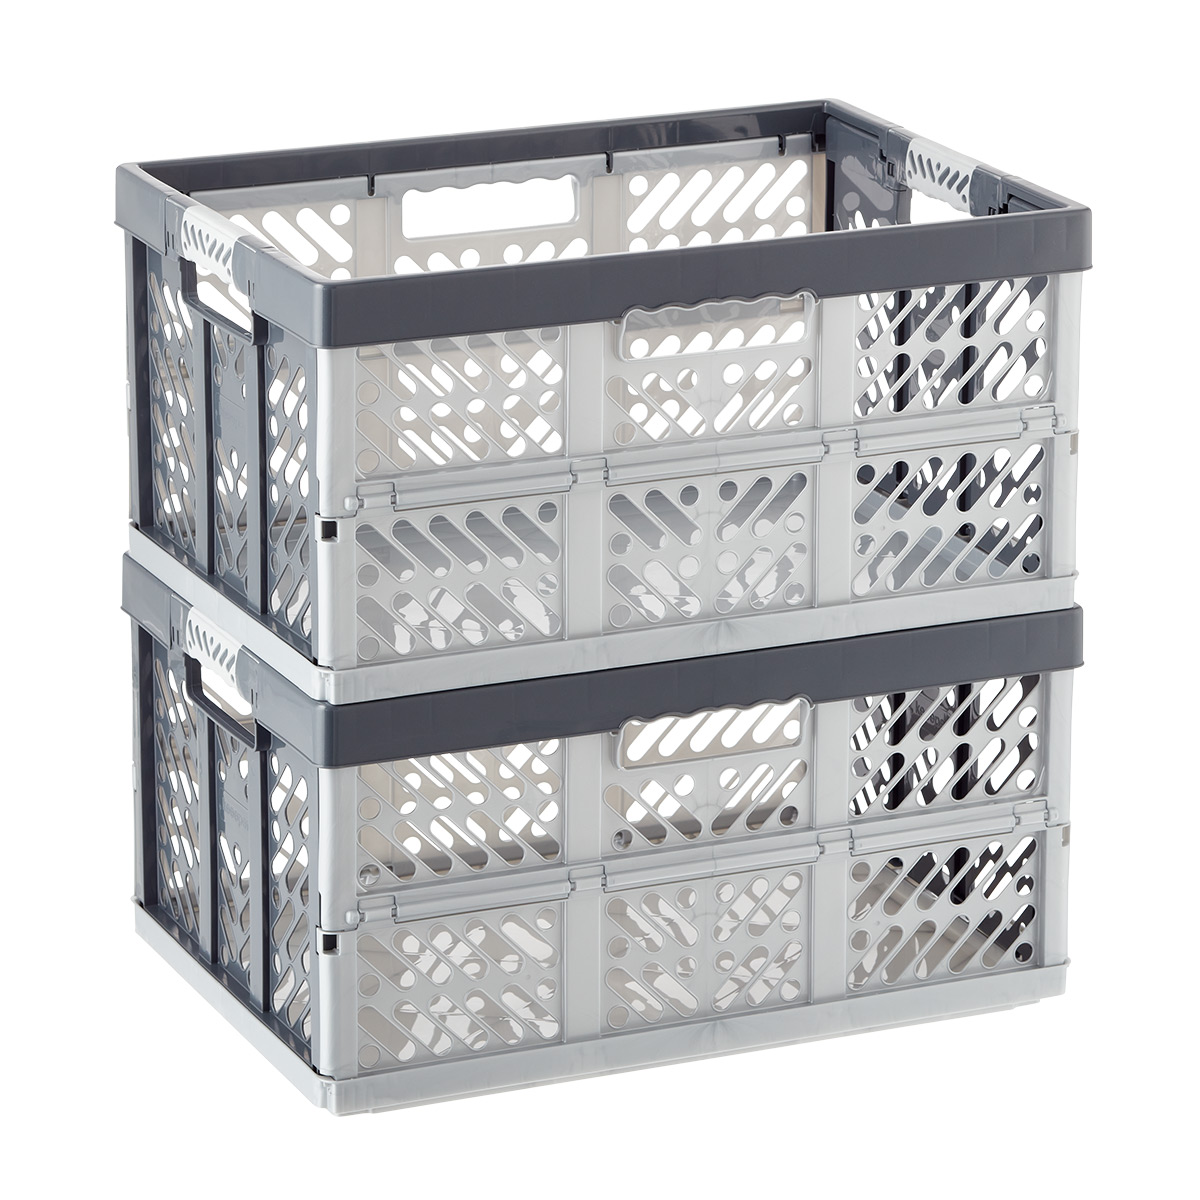 NEW Meori Foldable Box Faltbox Storage Container Organizer Office to Go